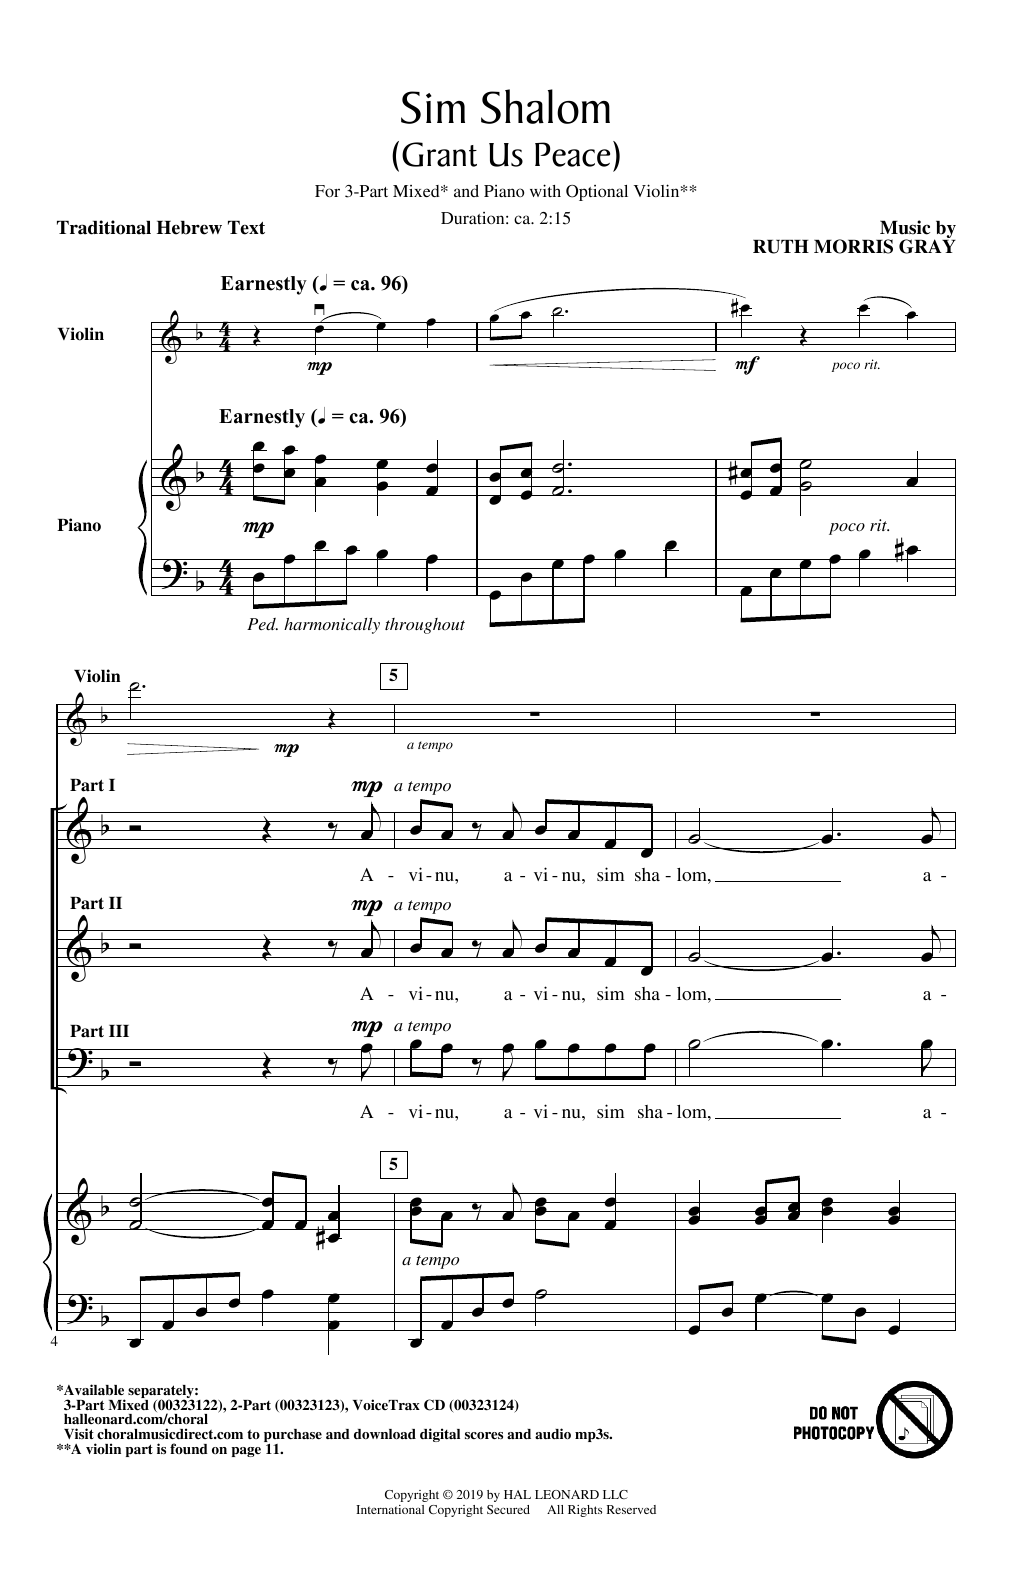 Ruth Morris Gray Sim Shalom (Grant Us Peace) Sheet Music Notes & Chords for 2-Part Choir - Download or Print PDF